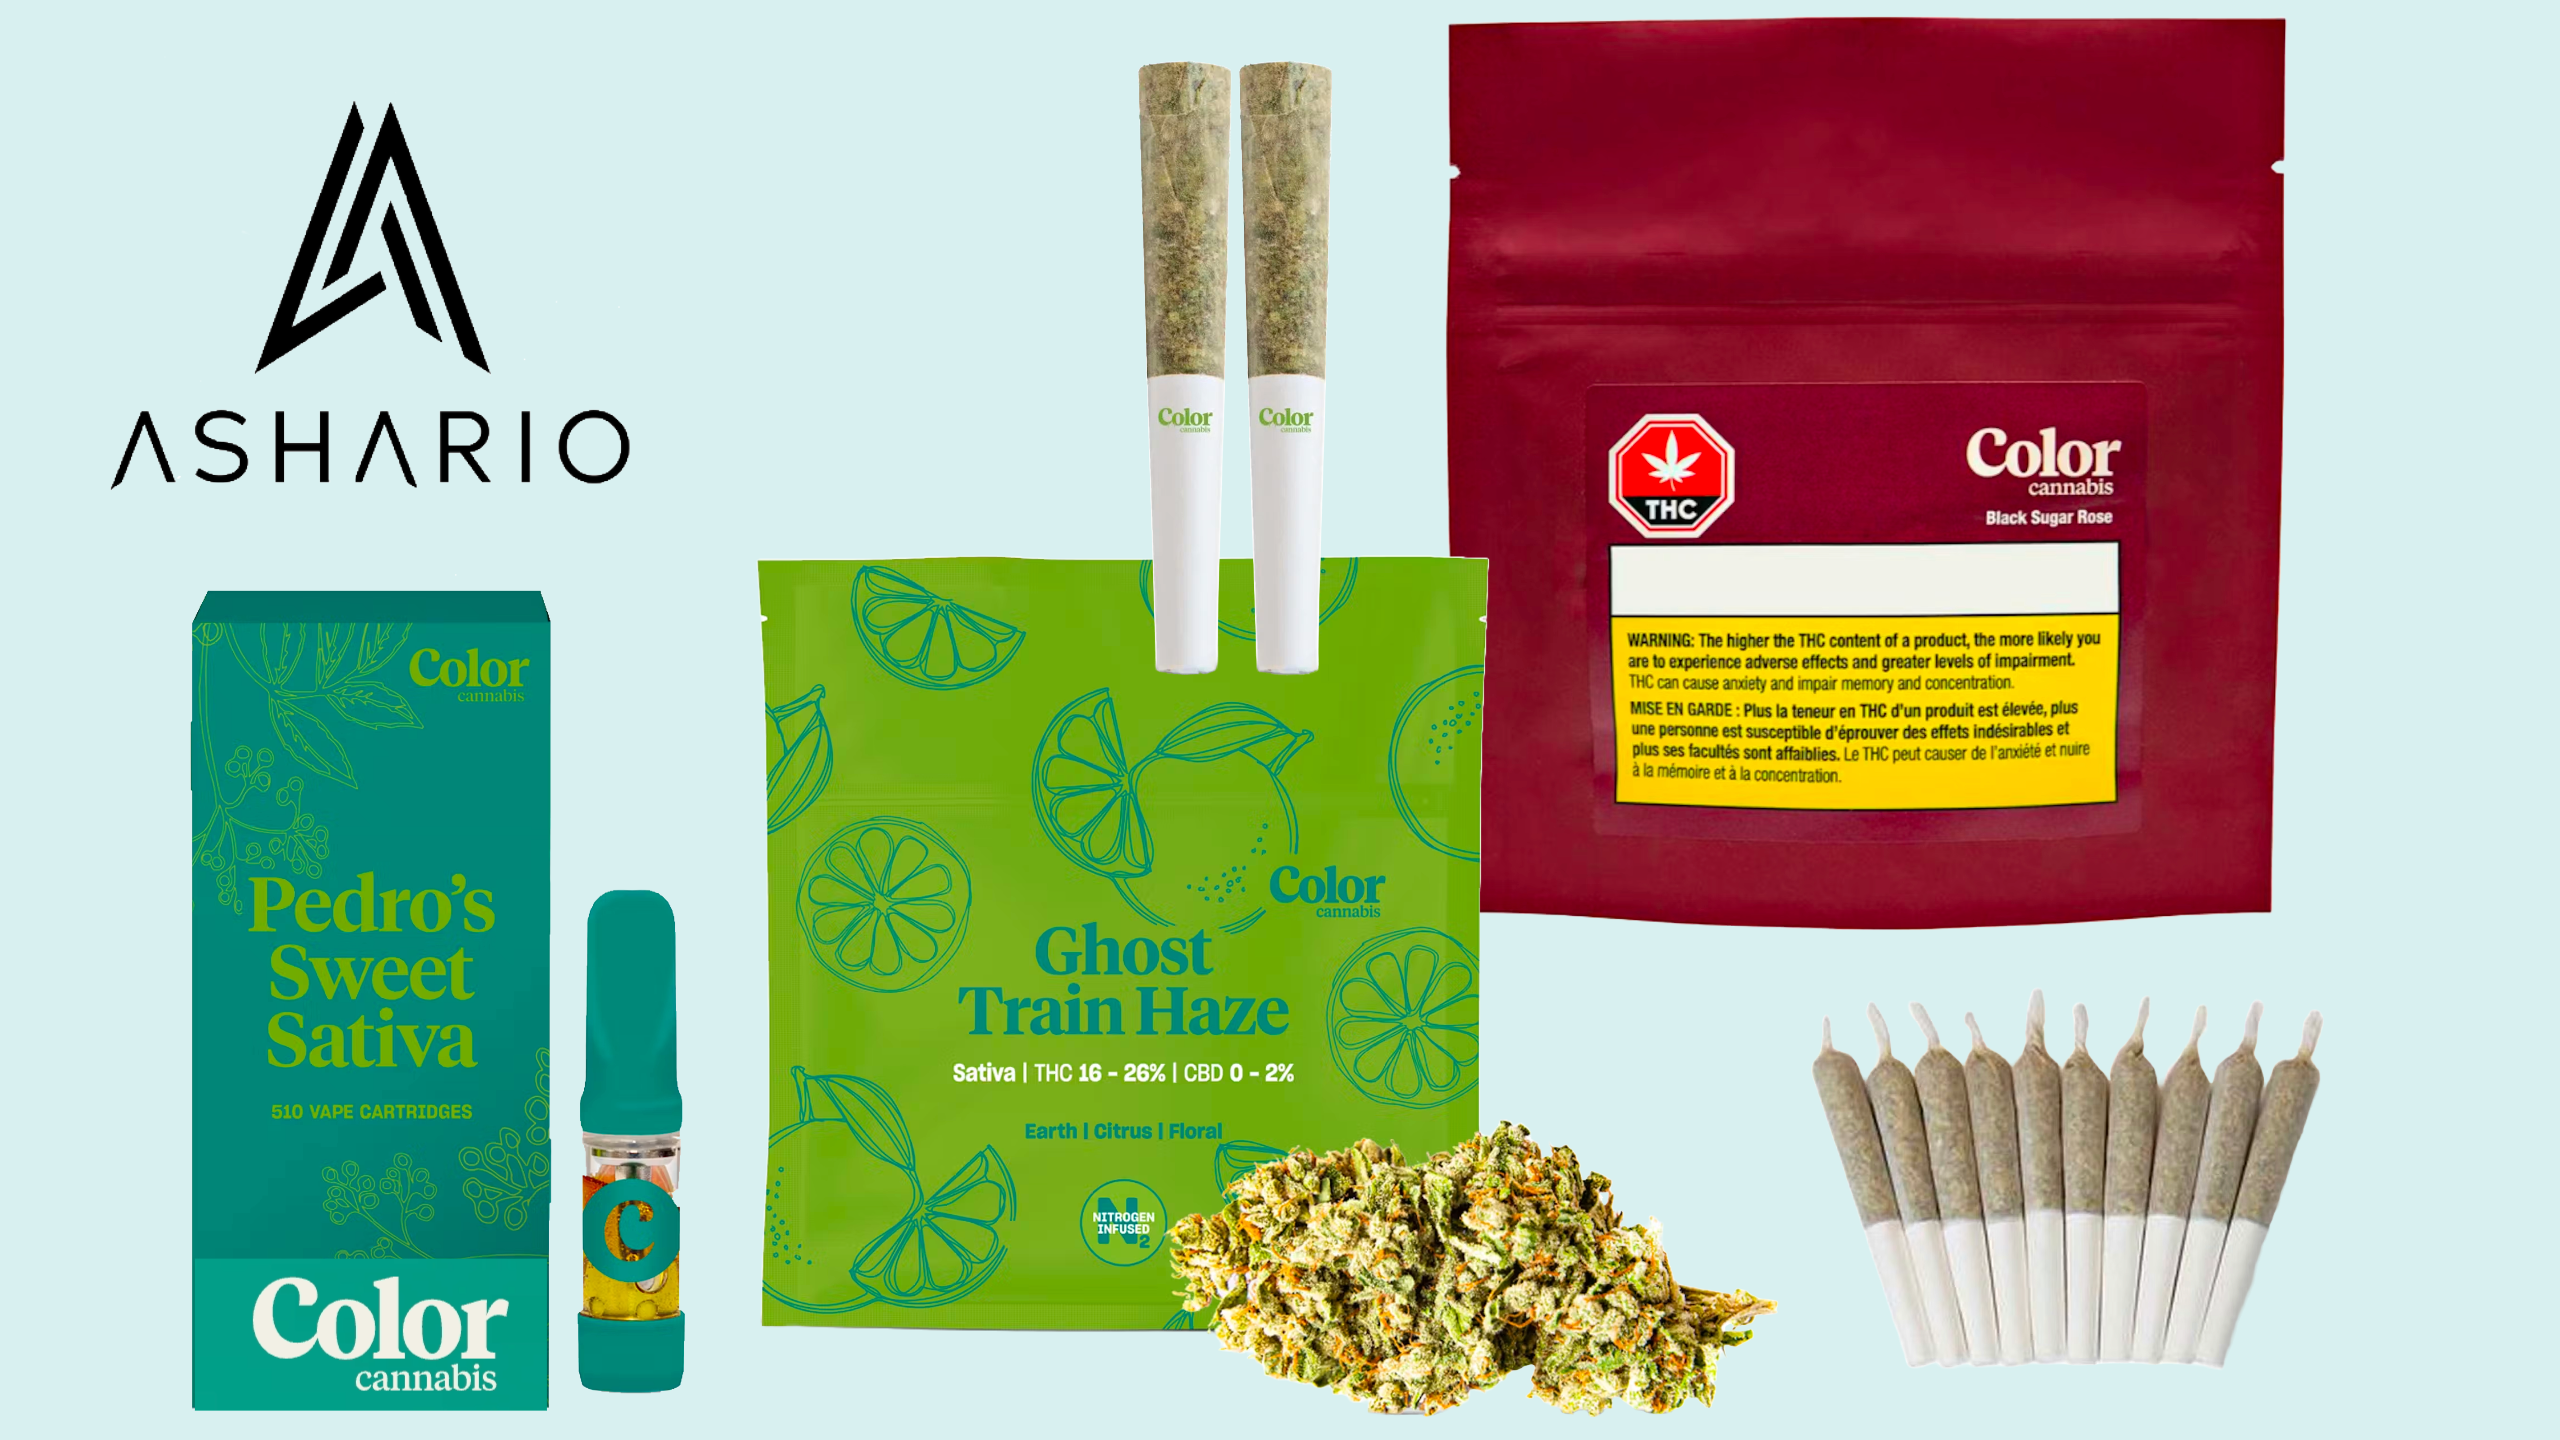 Ashario Cannabis Brand Spotlight: The Magic of Color Cannabis in Canada